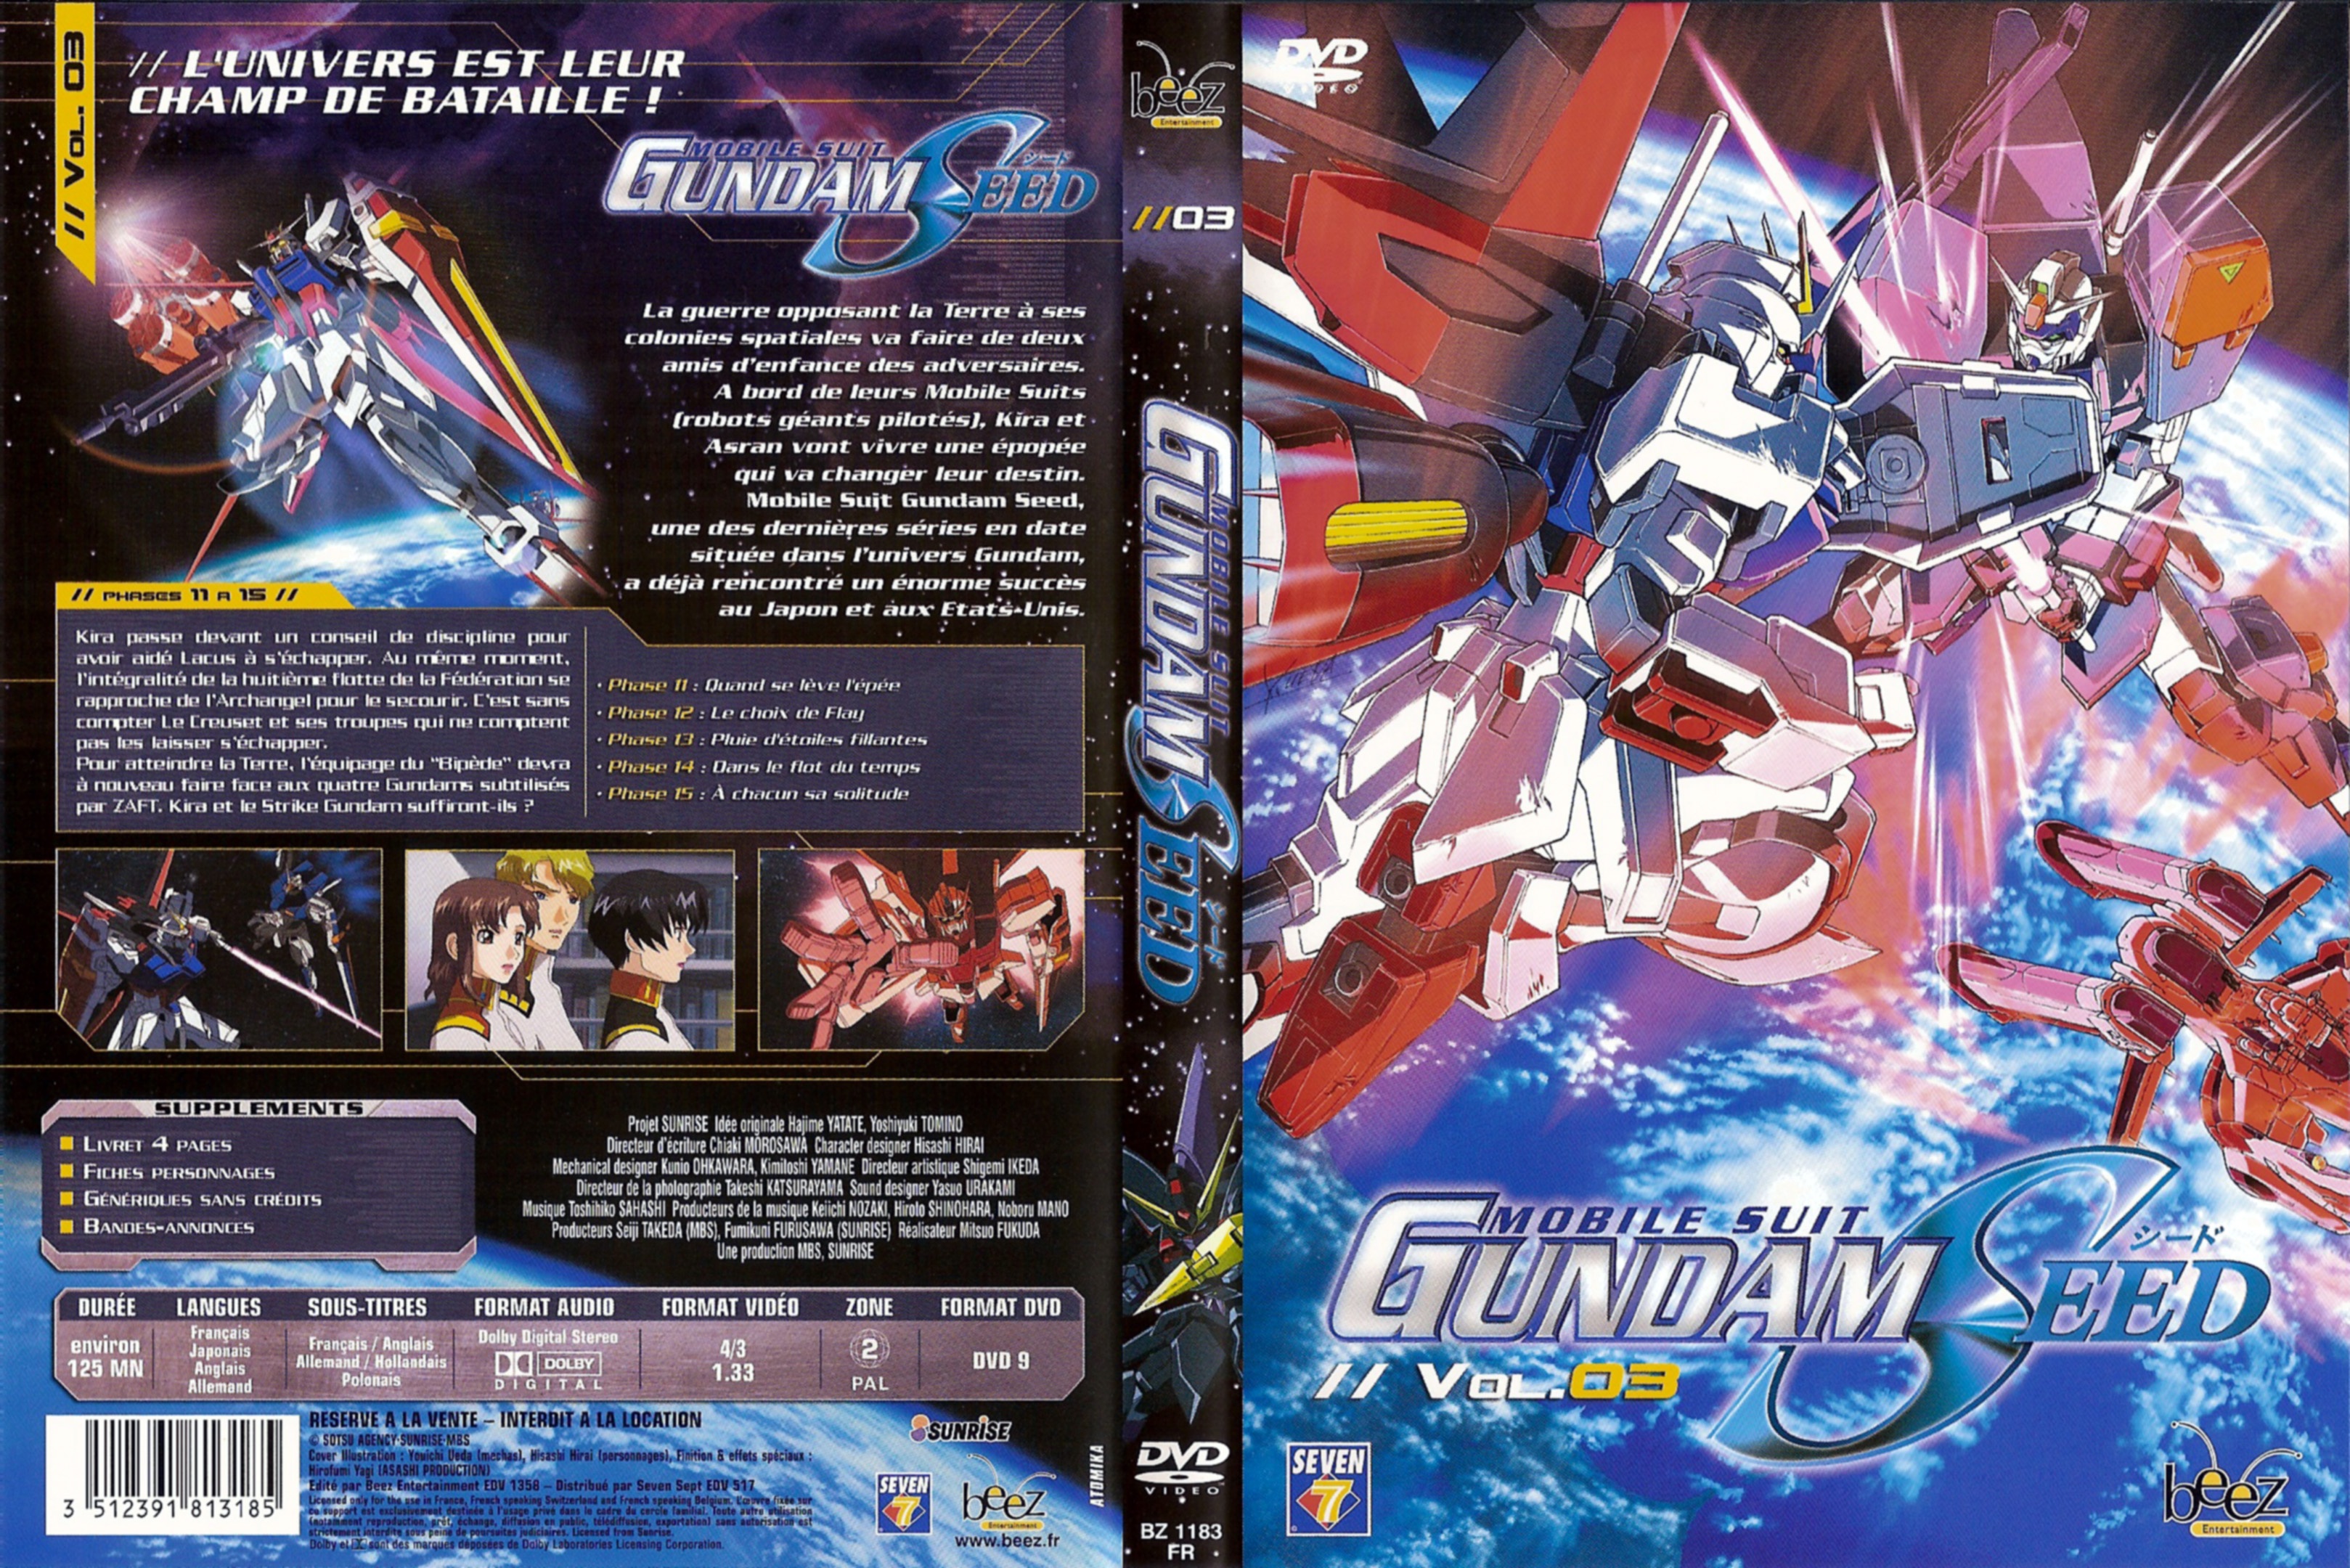 Jaquette DVD Gundam seed vol 03